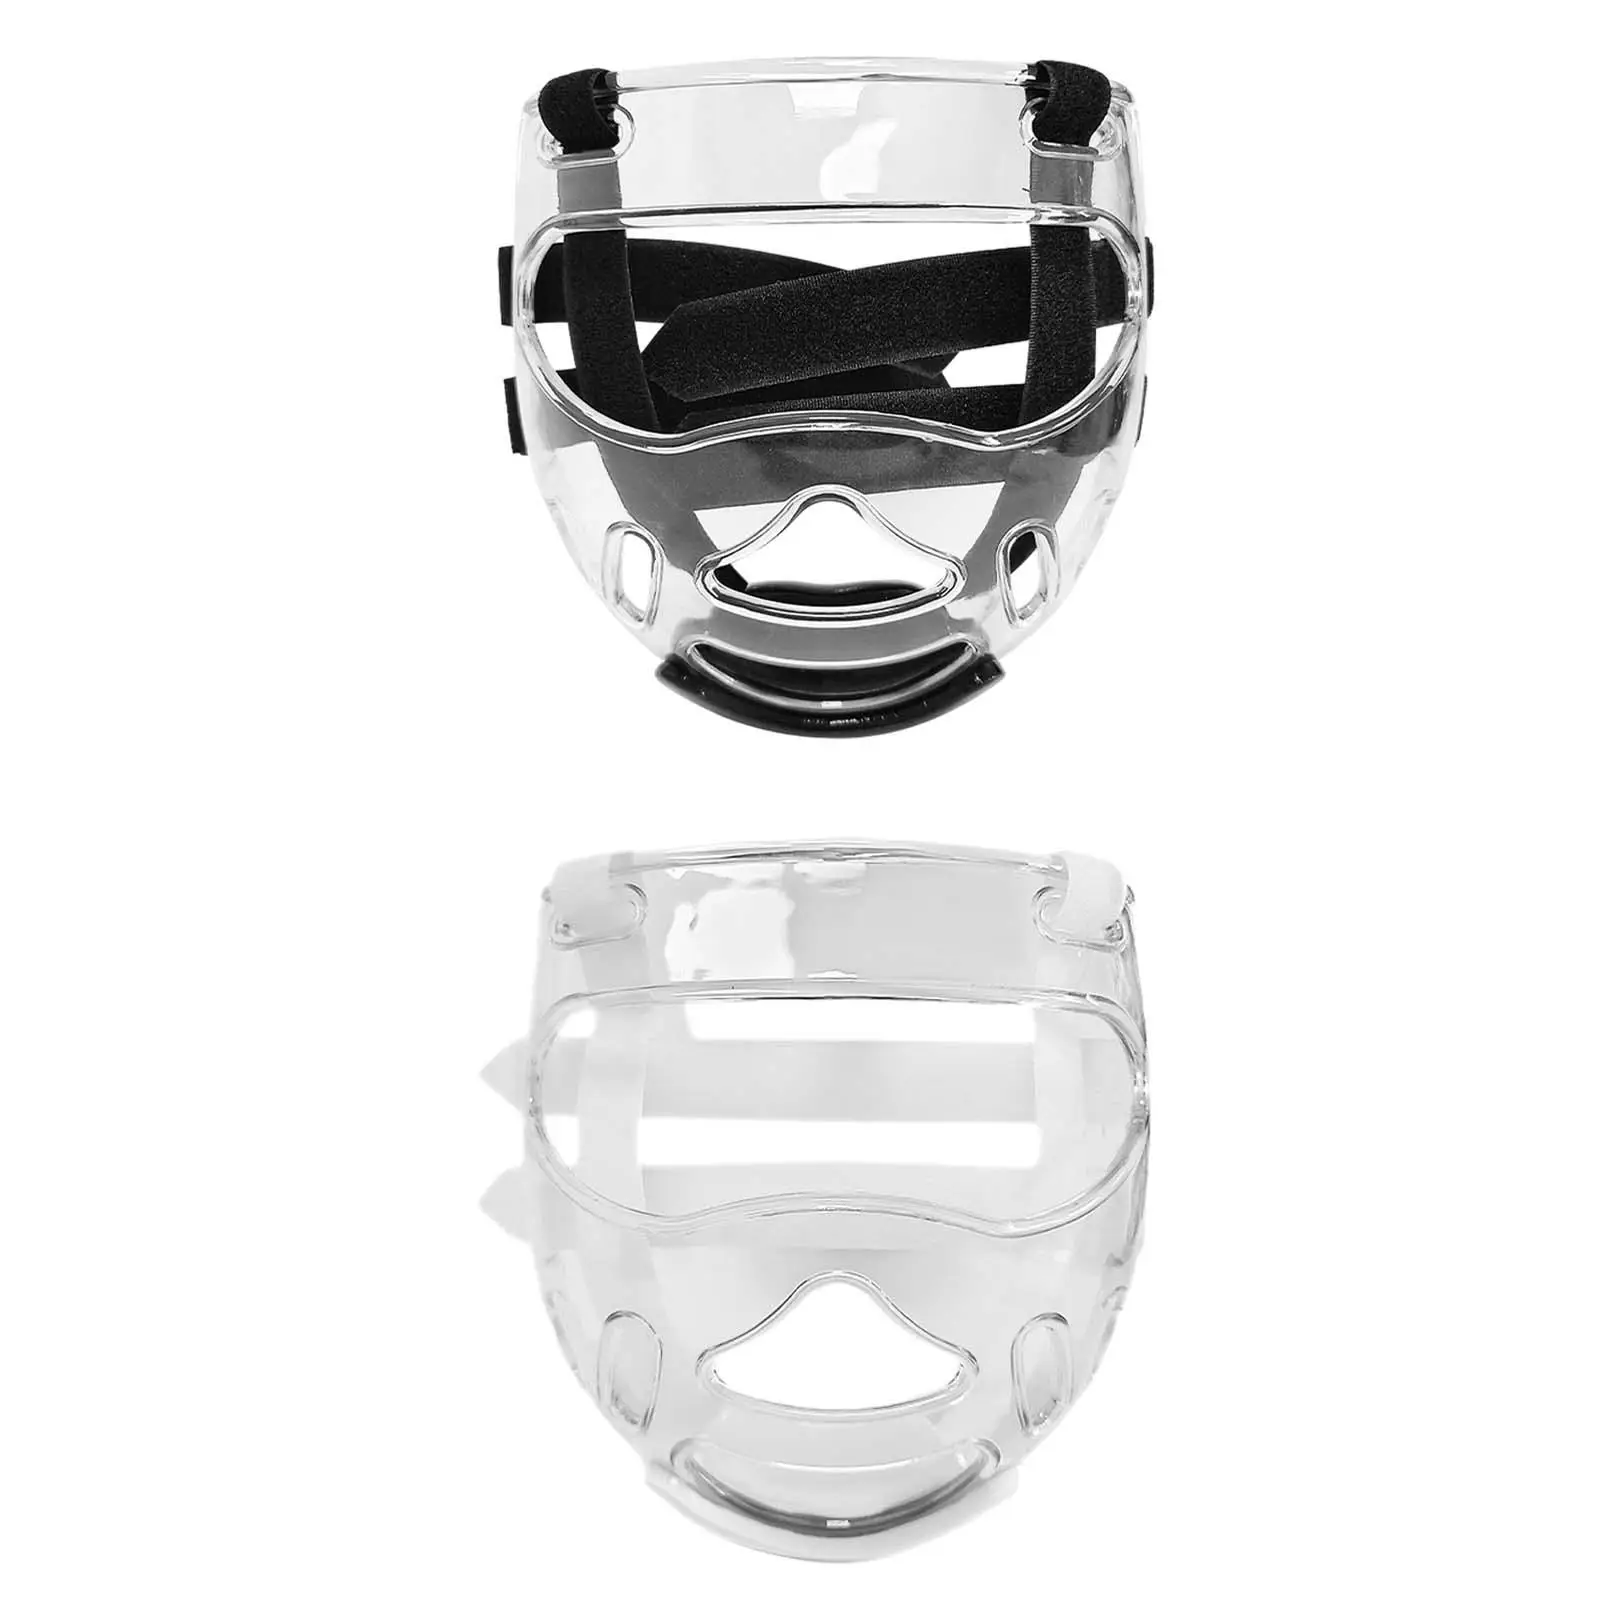 Taekwondo Mask Taekwondo Face Shield Portable Face Protection Cover for Grappling Muay Thai Wrestling Martial Arts Training